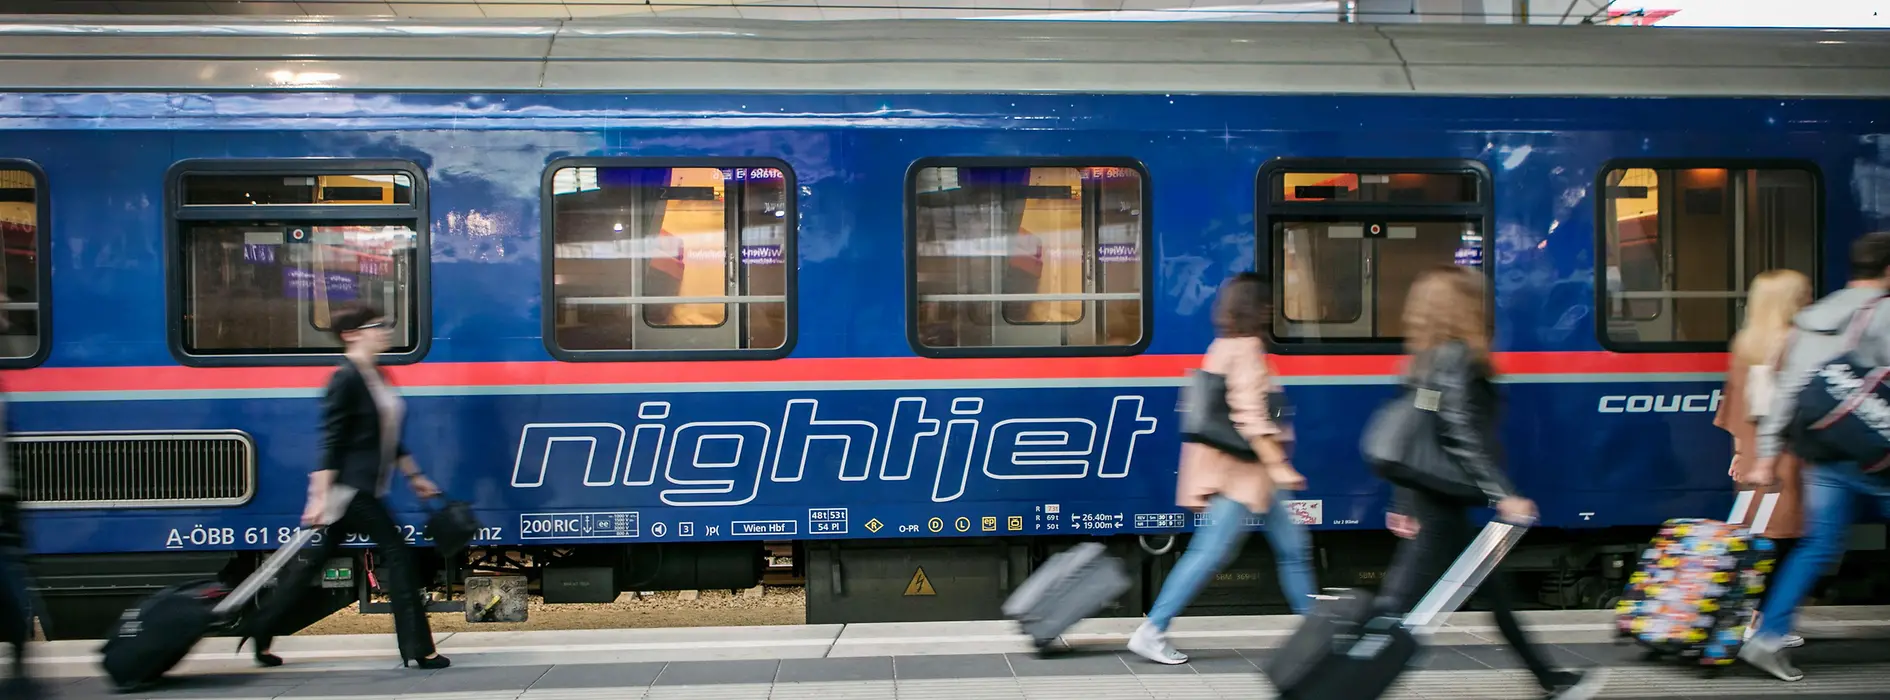 Nightjet ÖBB en gare avec voyageurs à l'avant-plan